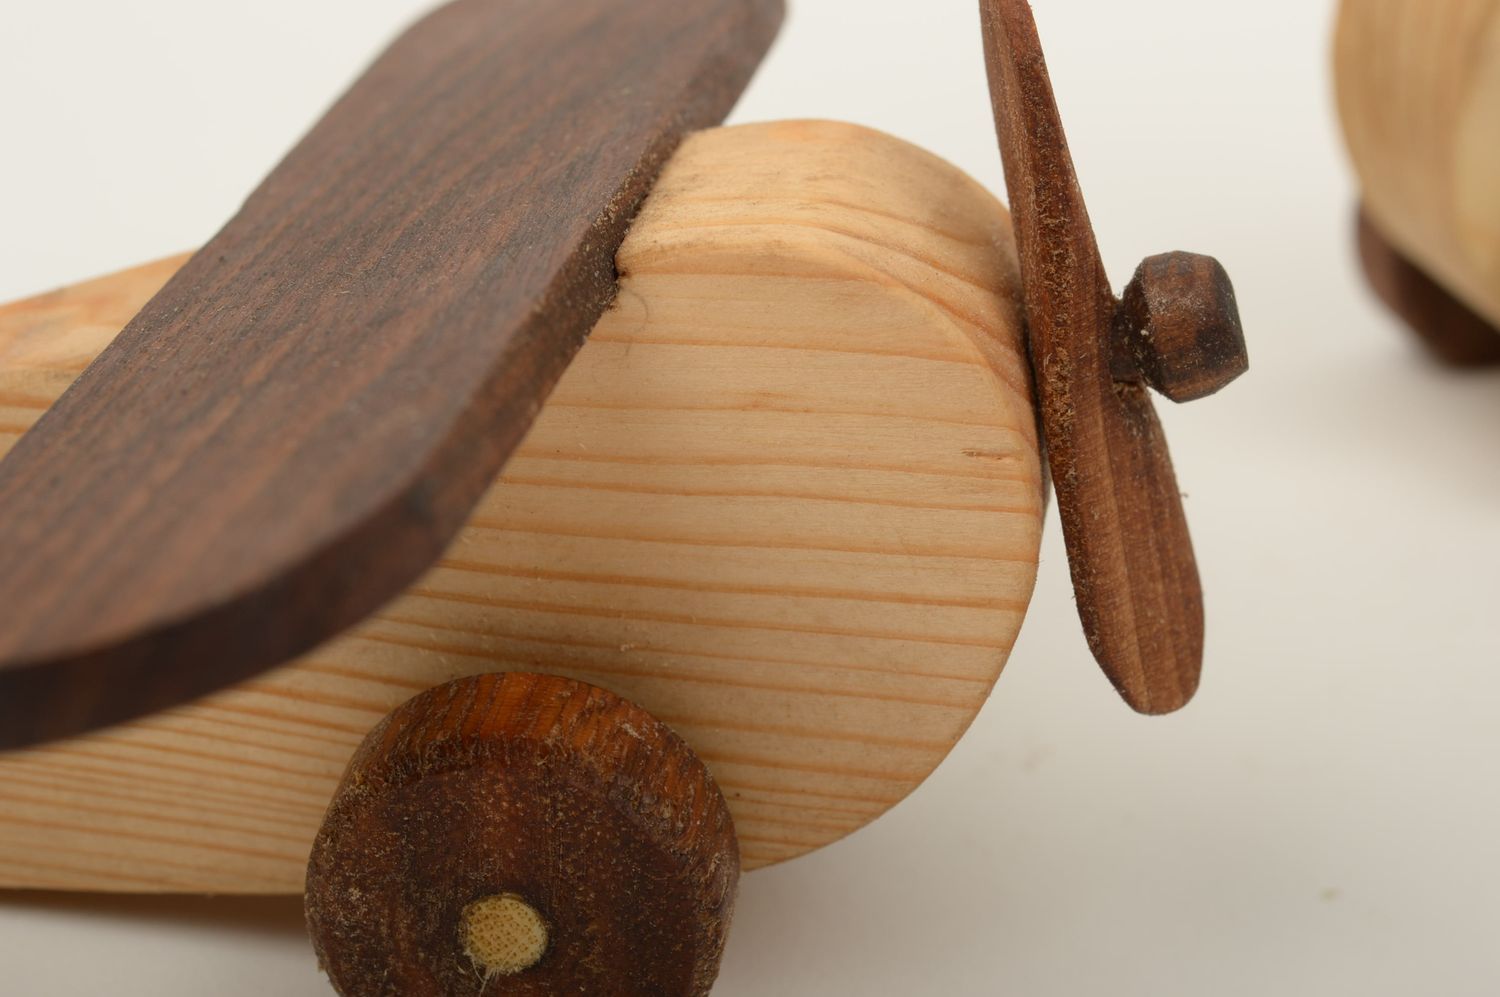 Handmade wooden toys